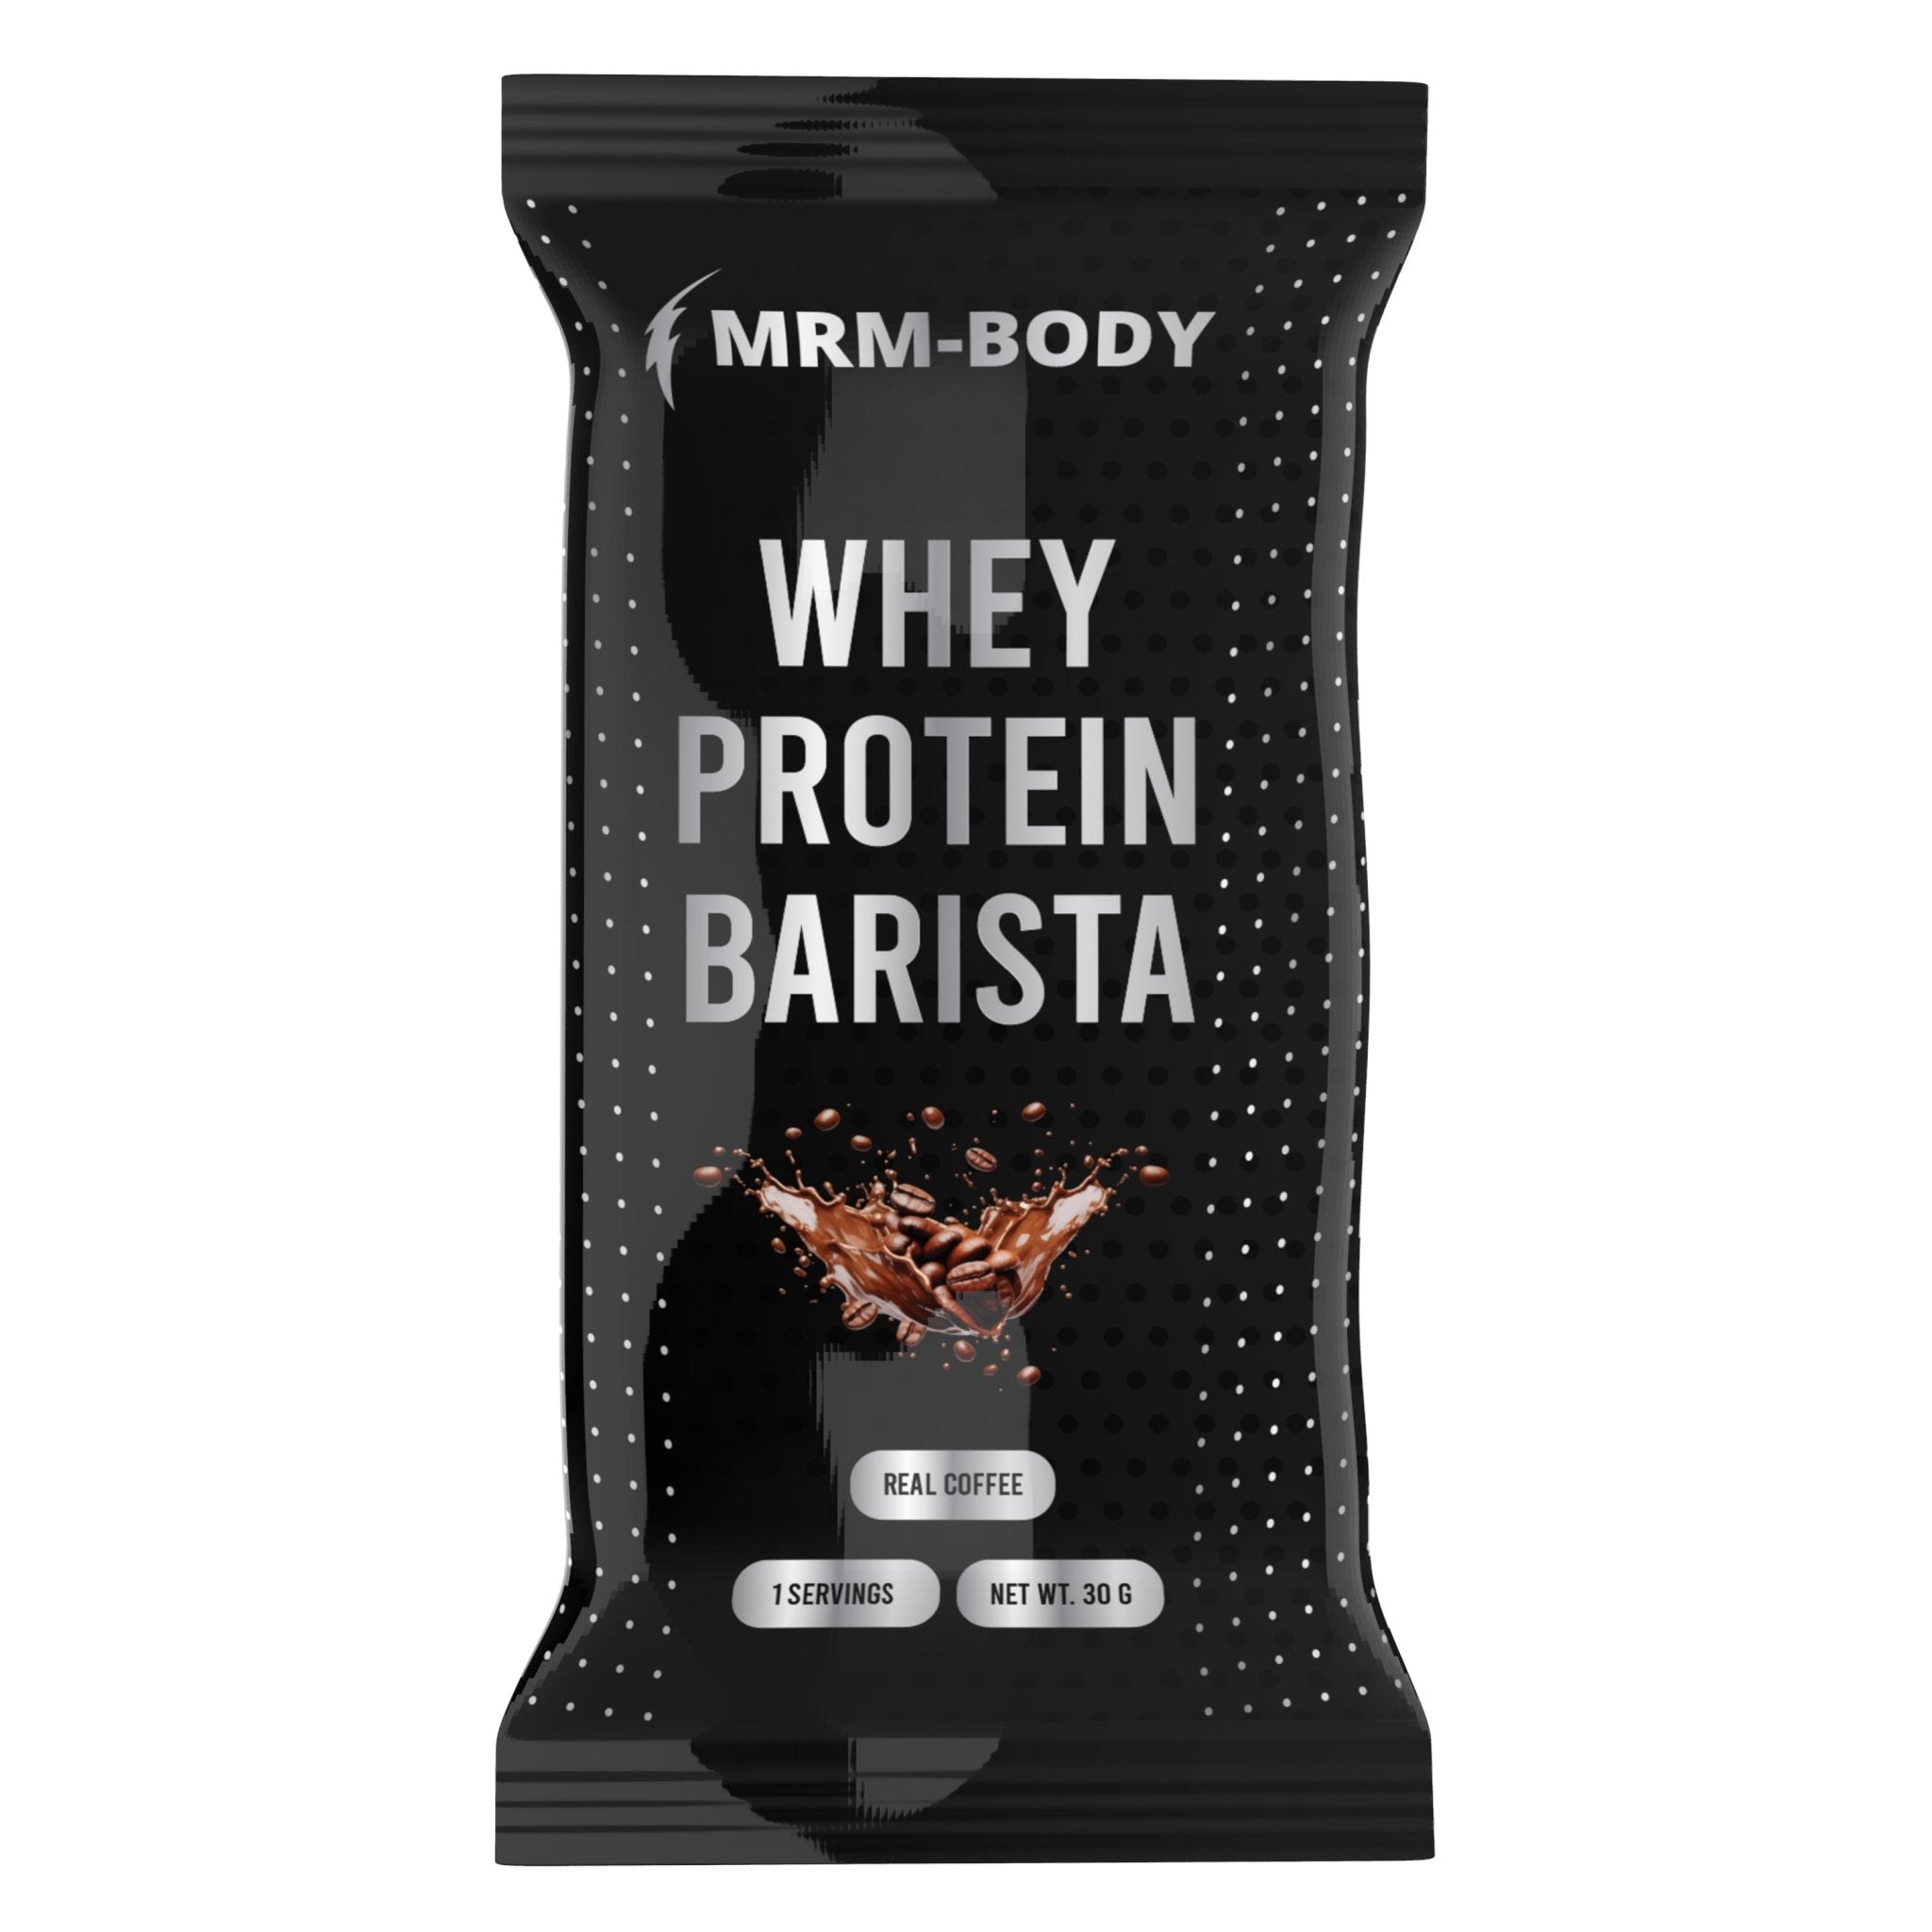 Whey Protein Barista - Sample - MRM-BODY